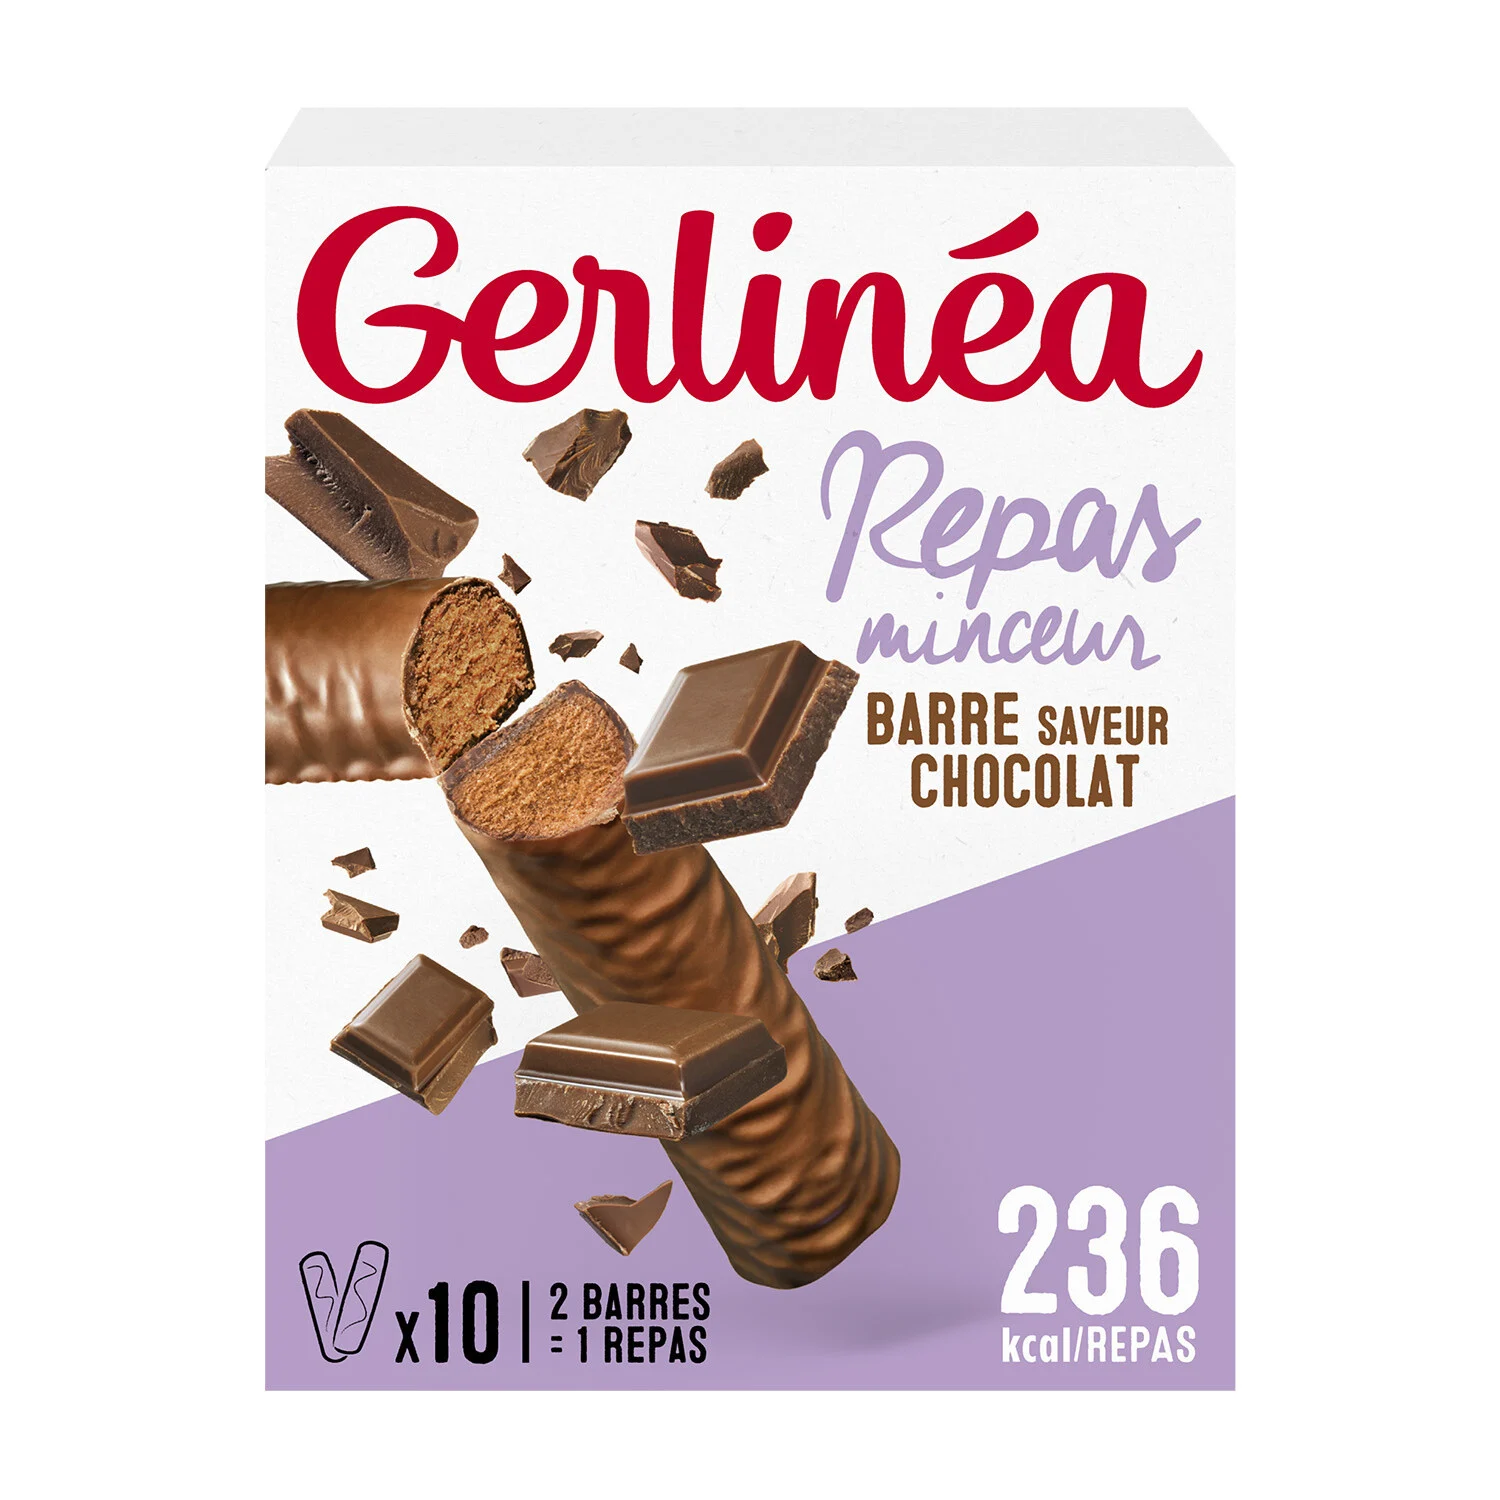 Barre Repas Saveur Chocolat 310g - Gerlinea